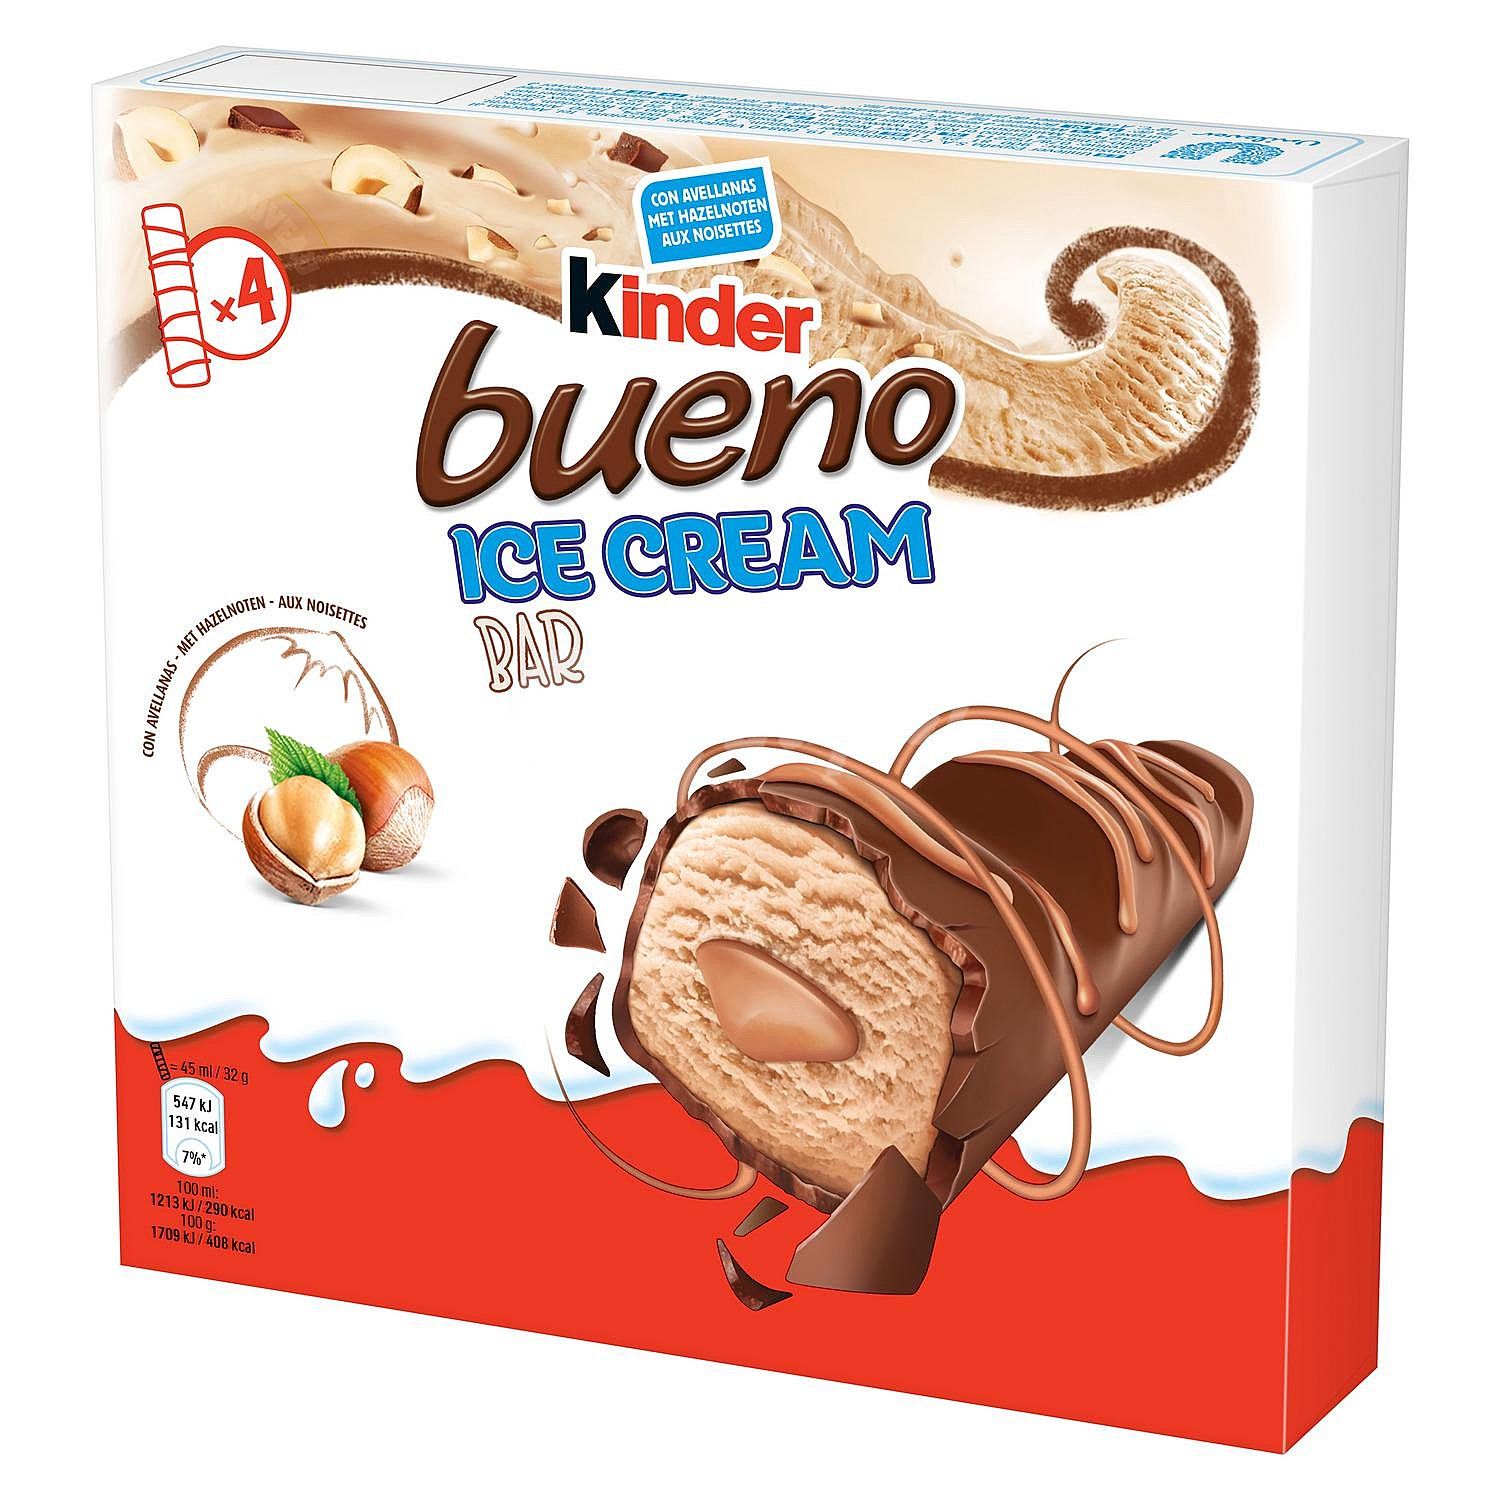 Kinder Bueno Ice Cream Bar